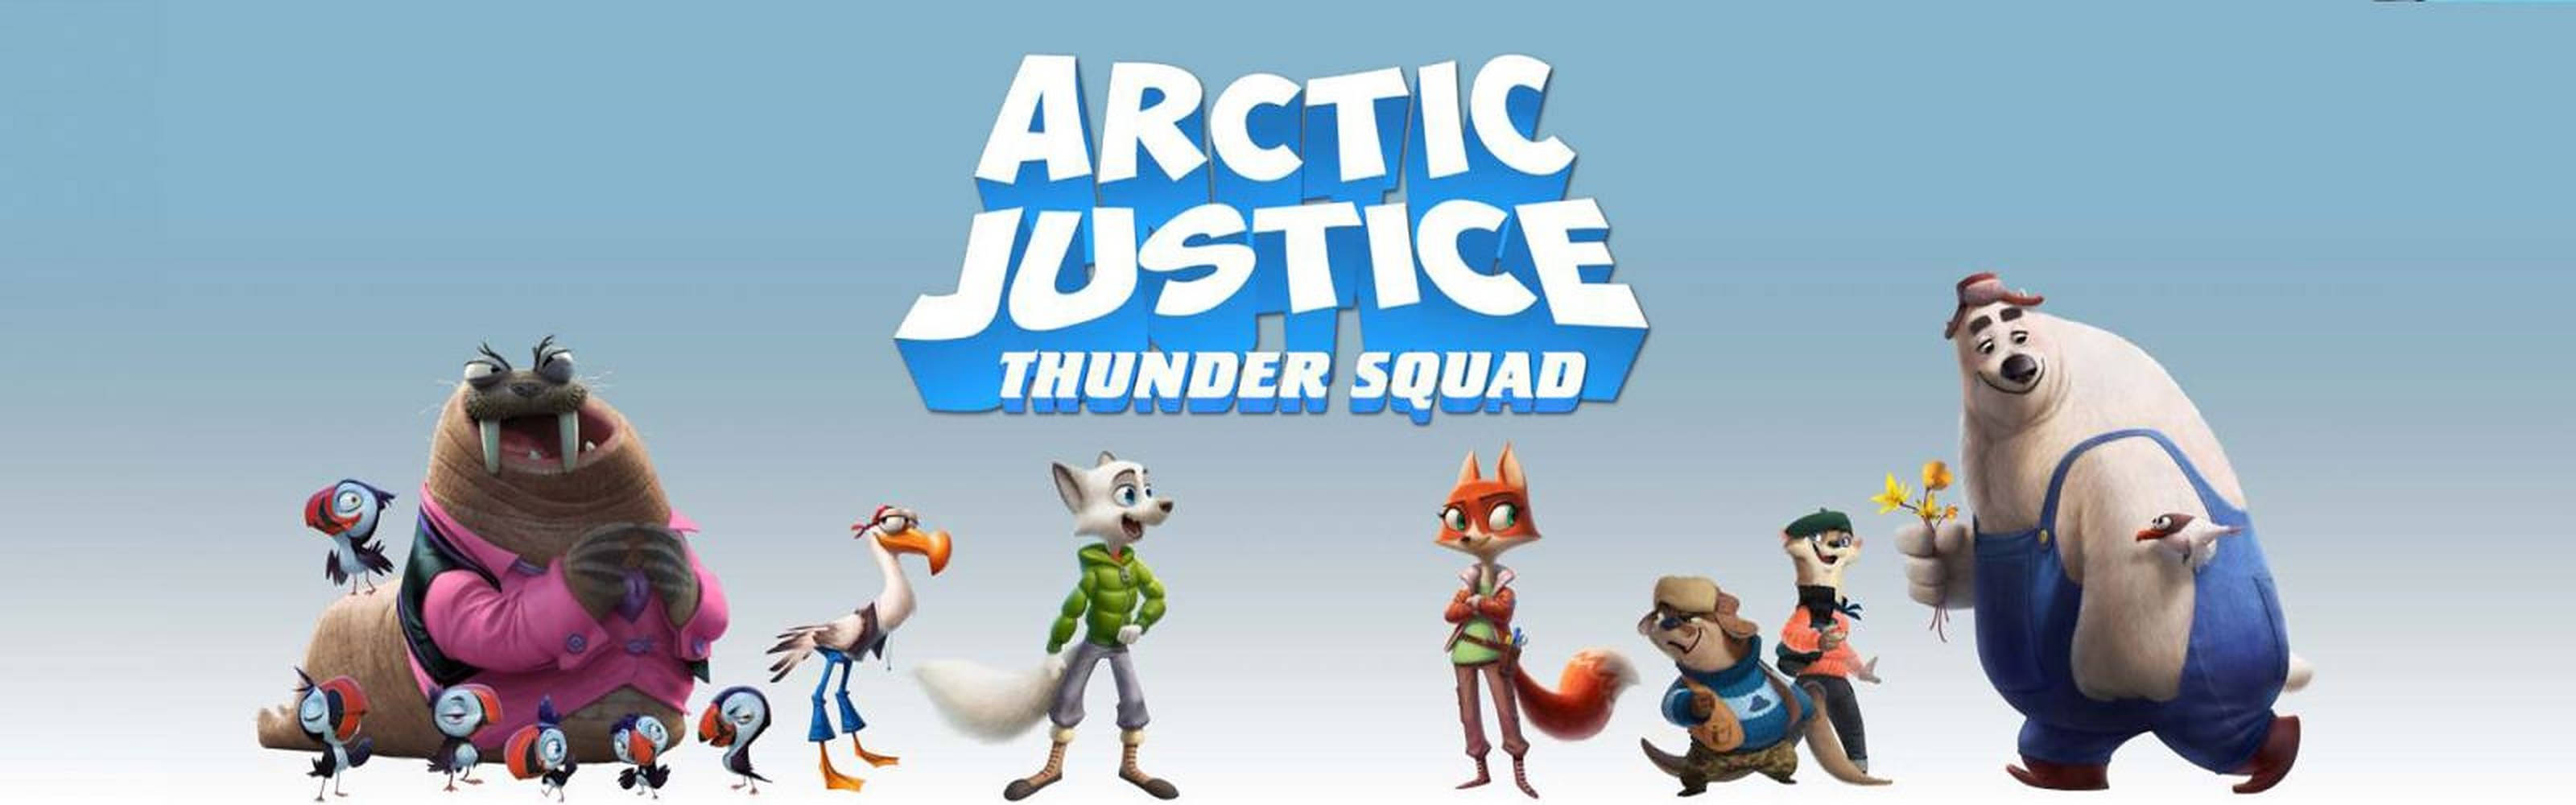 Arctic Justice Thunder Squad Background